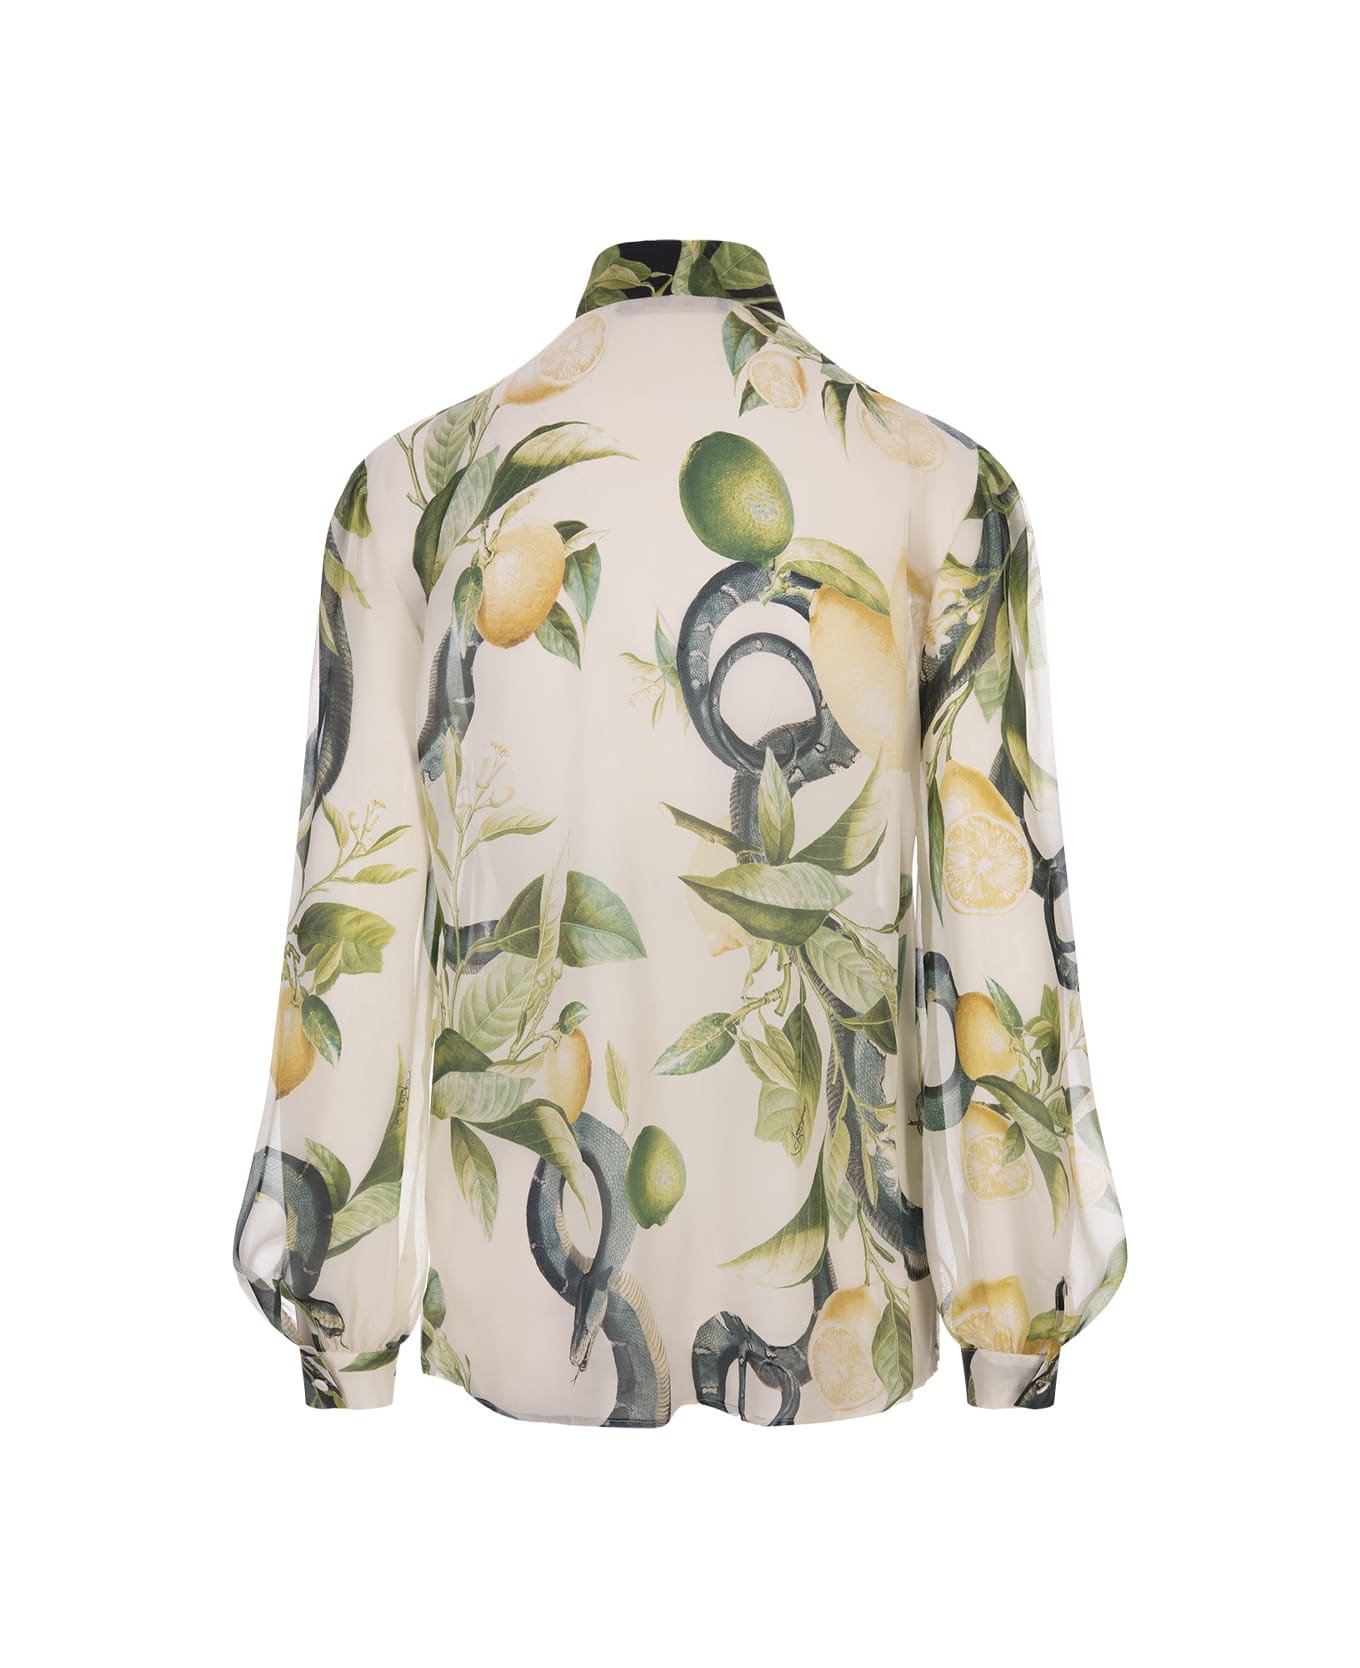 Roberto Cavalli Ivory Shirt With Lemons Print - Multicolor ブラウス